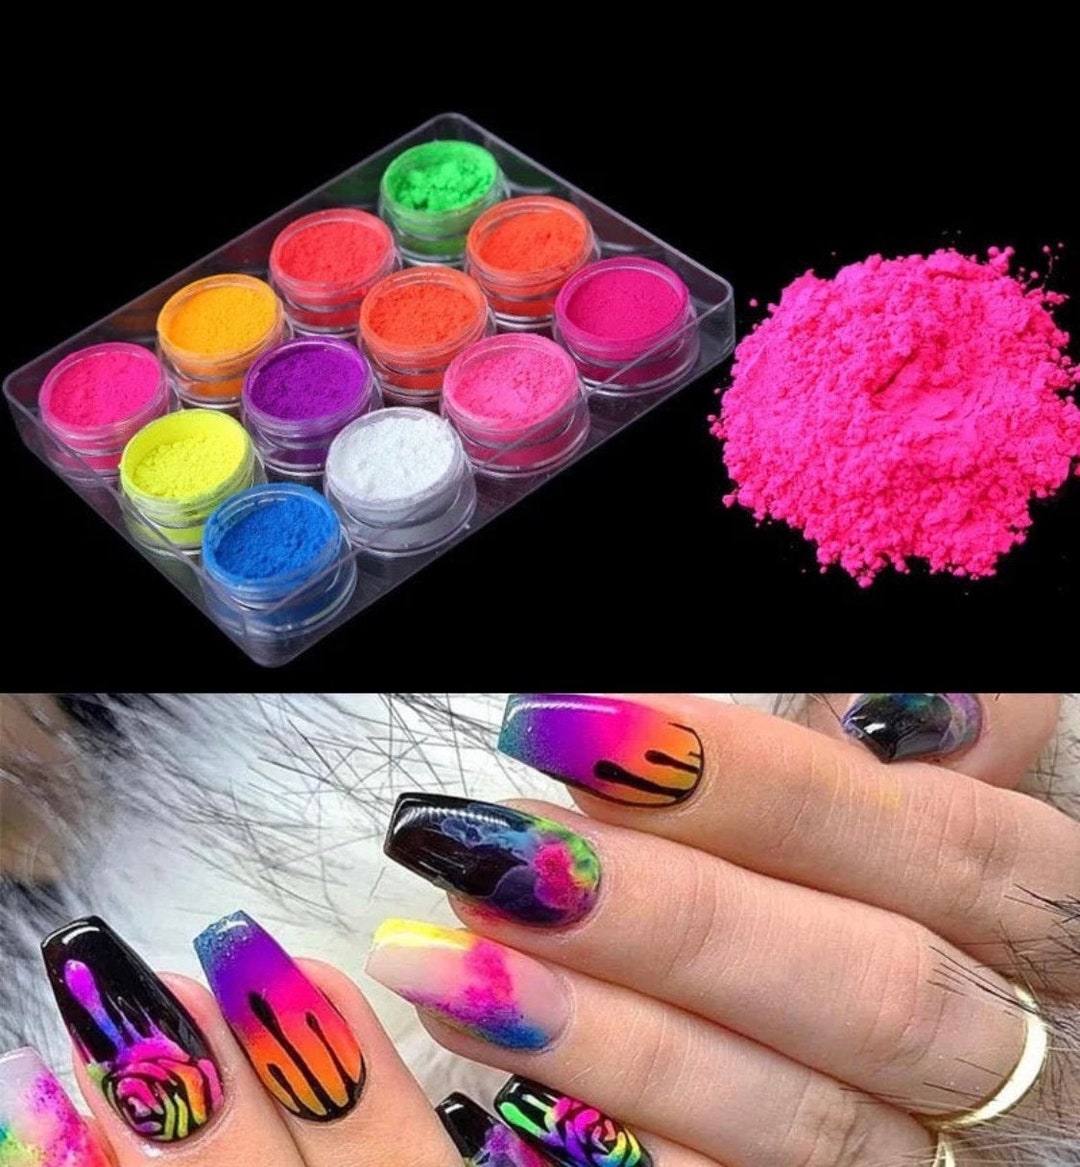 Nails by Nicole - Neon Pigment Powder - 12 Piece